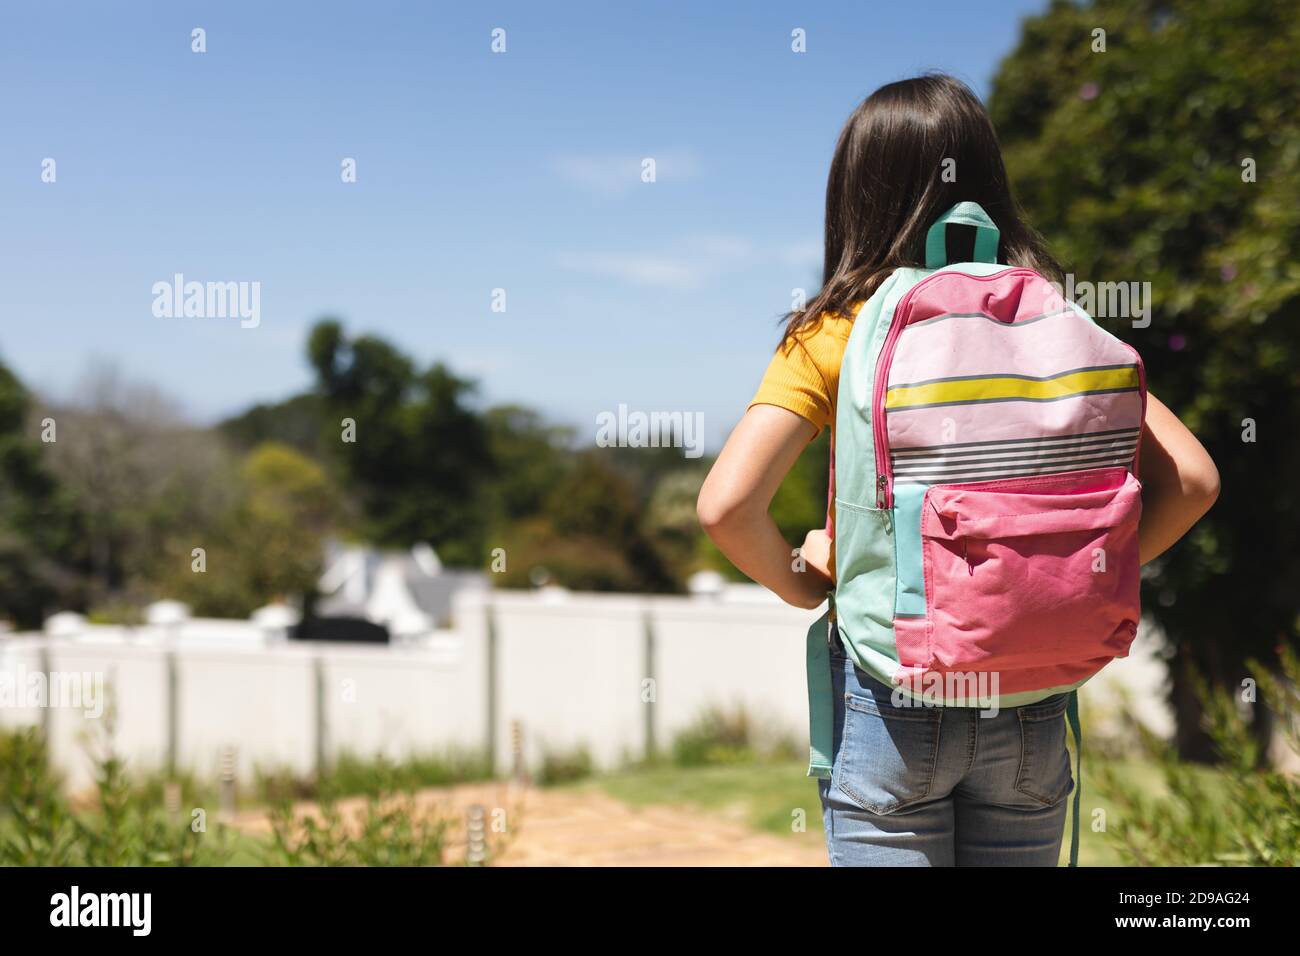 Caucasian girl with shoulder length dark hair walking to school carrying schoolbag Stock Photo